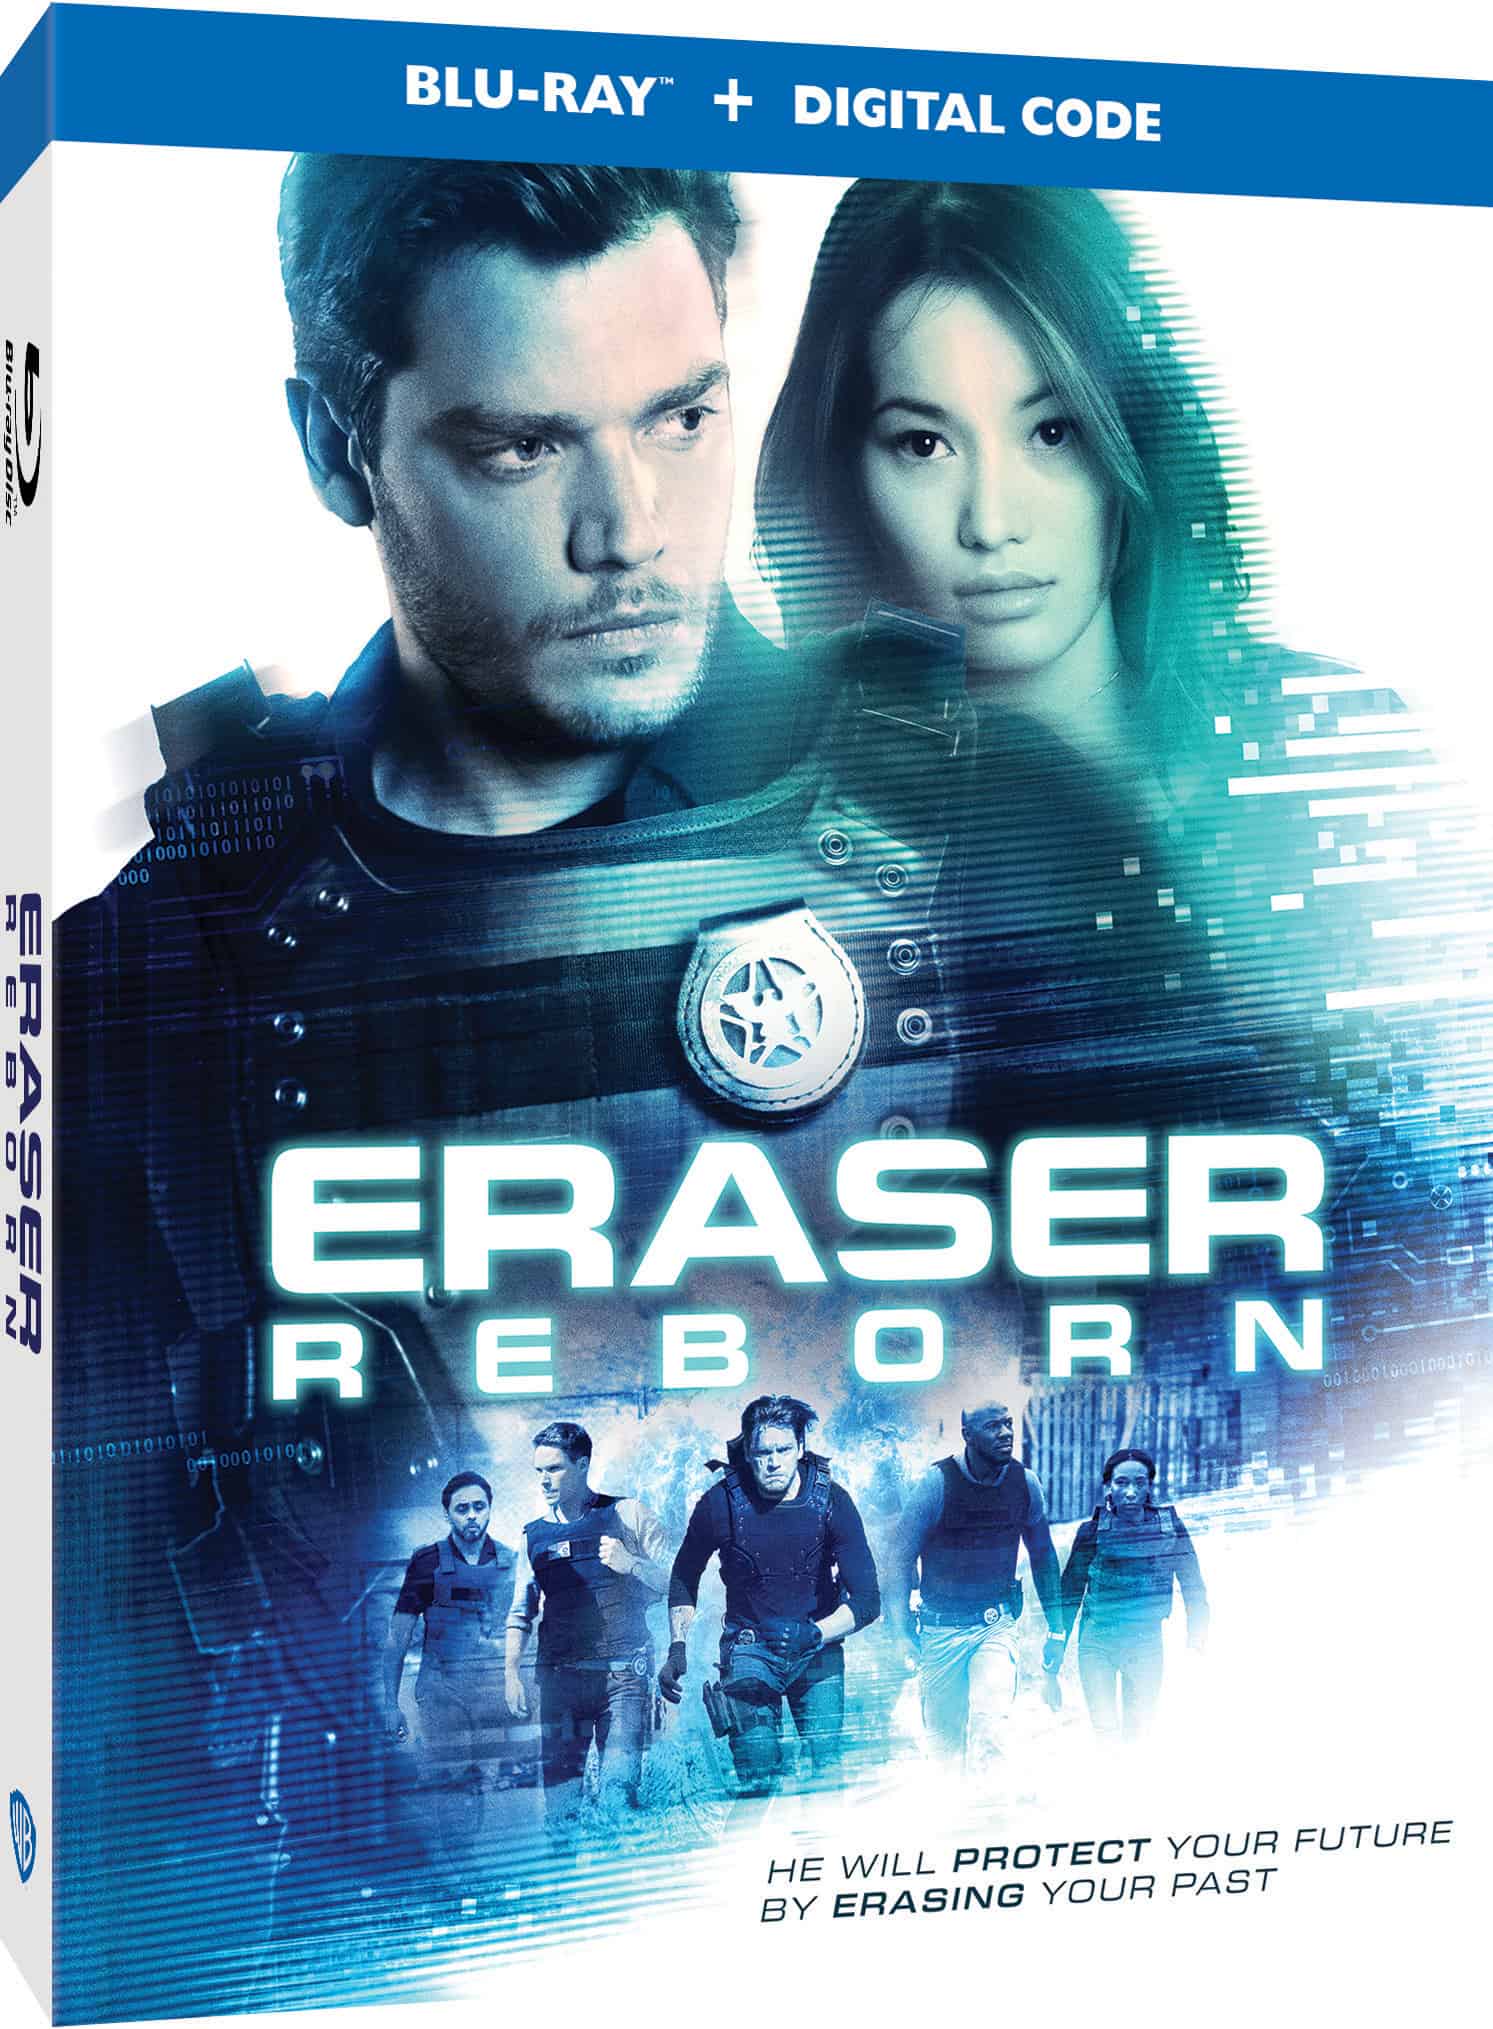 Eraser: Reborn Blu-ray box art